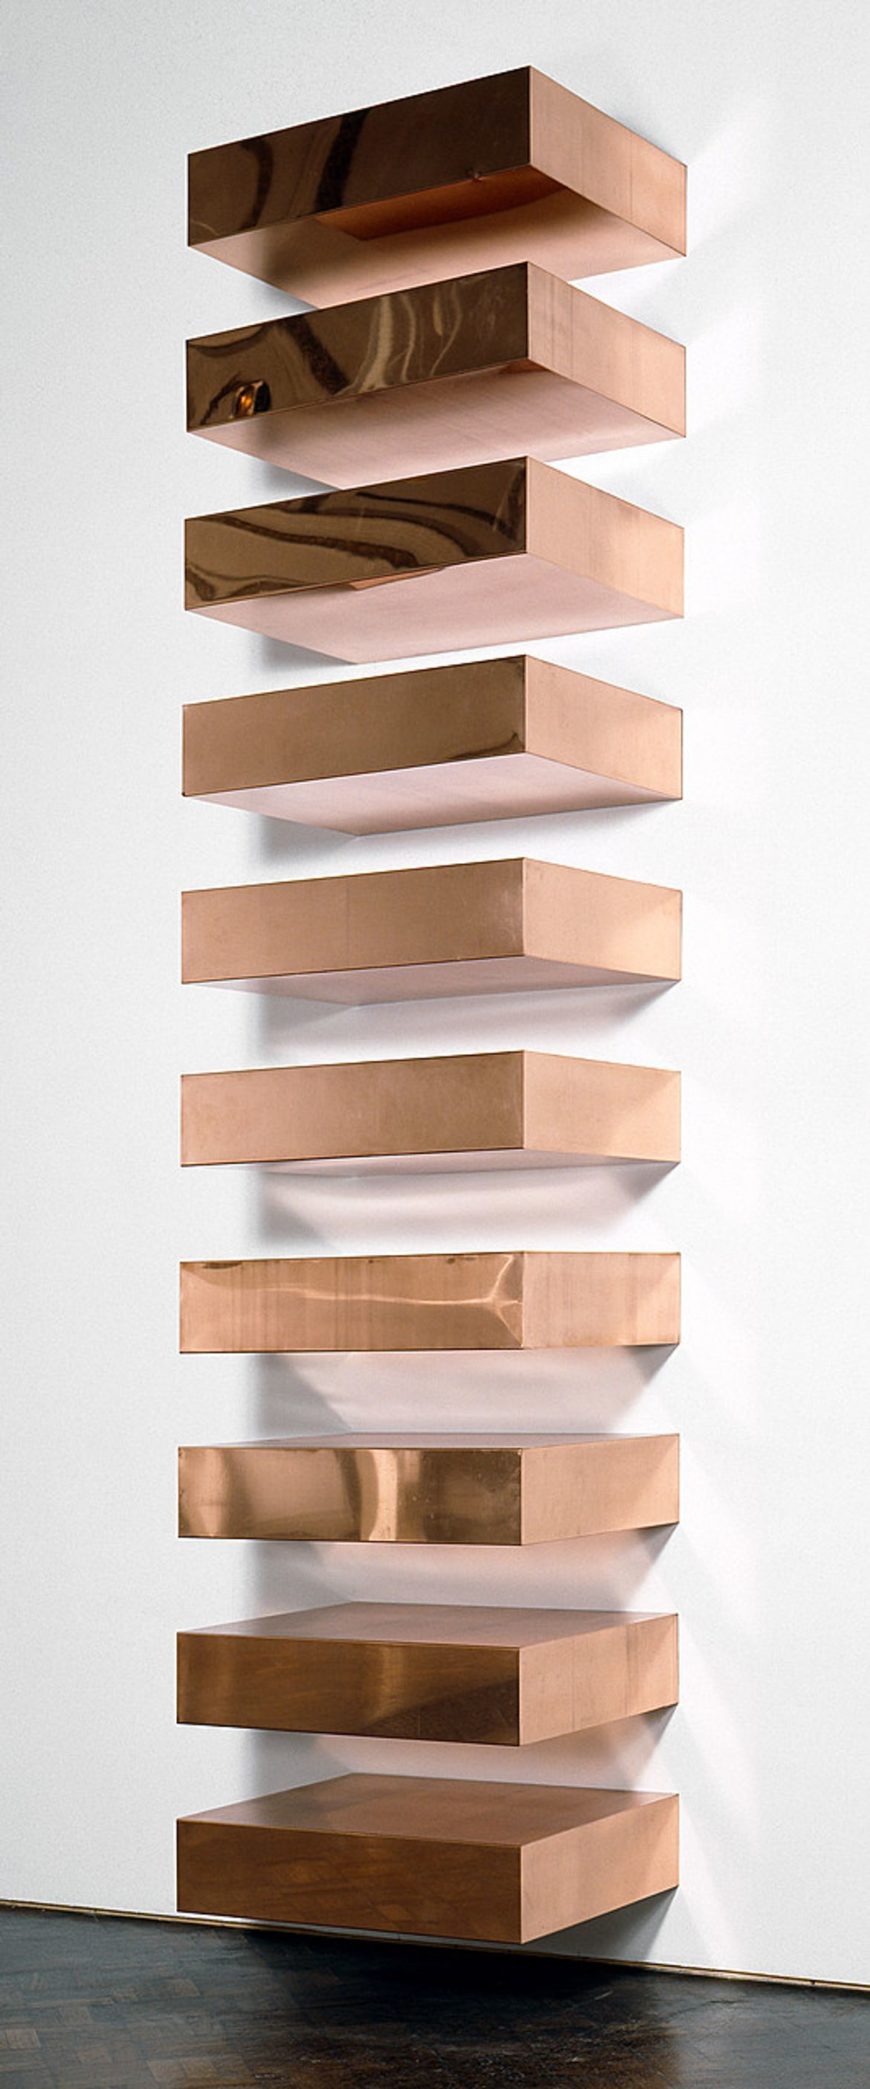 Donald Judd, Untitled, 1969, ten copper units, each 22.9 x 101.6 x 78.7 cm with 22.9 cm intervals (Guggenheim Museum, New York)